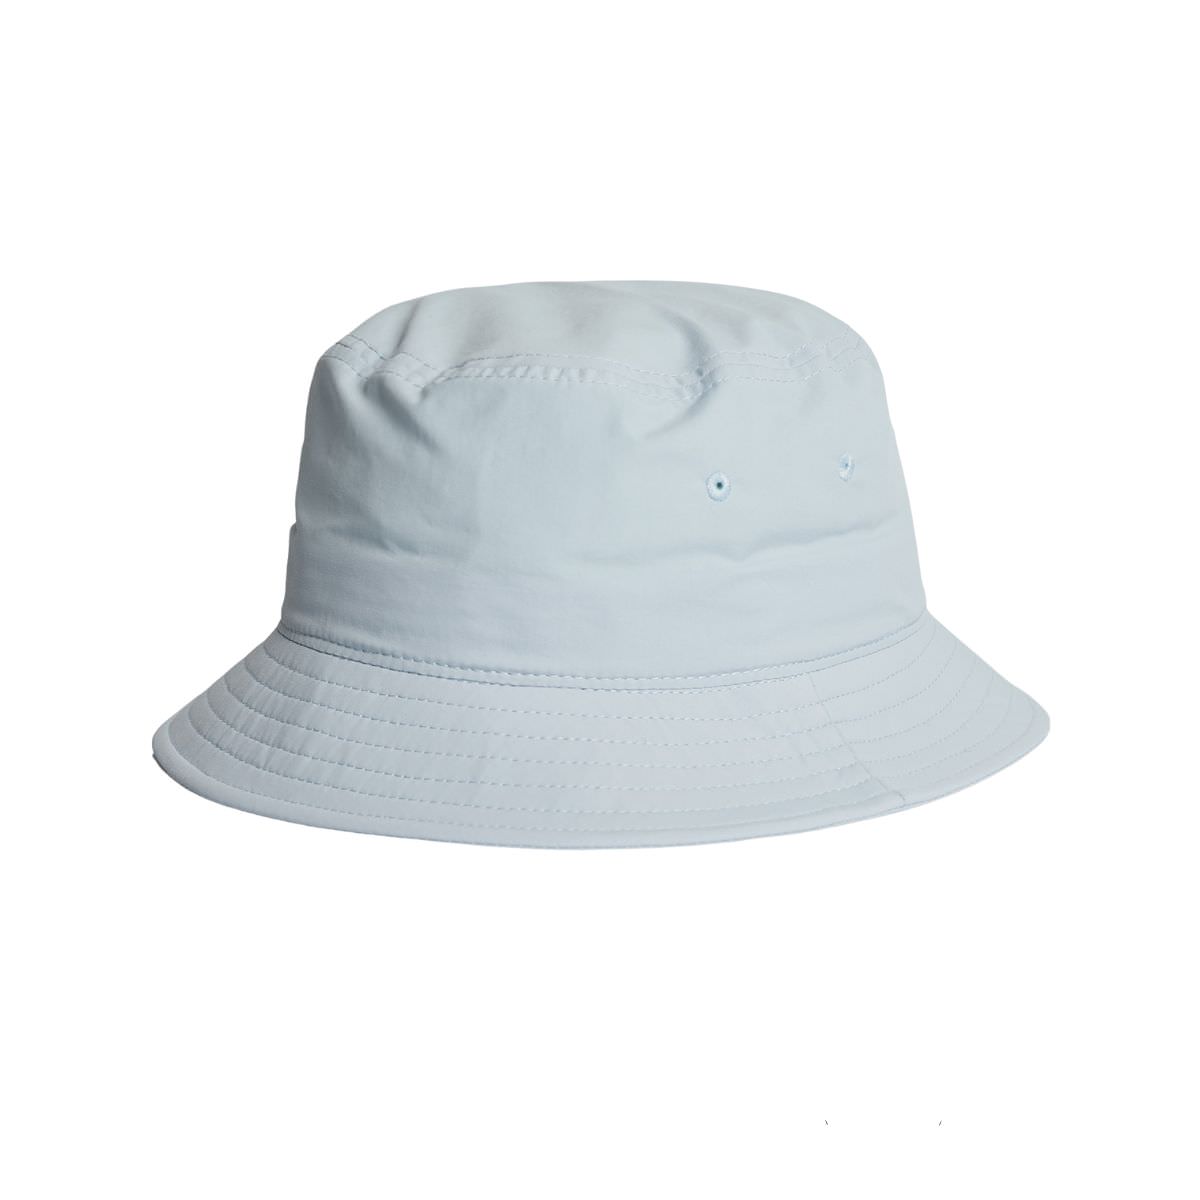 ascolour Nylon Bucket Hat 1171